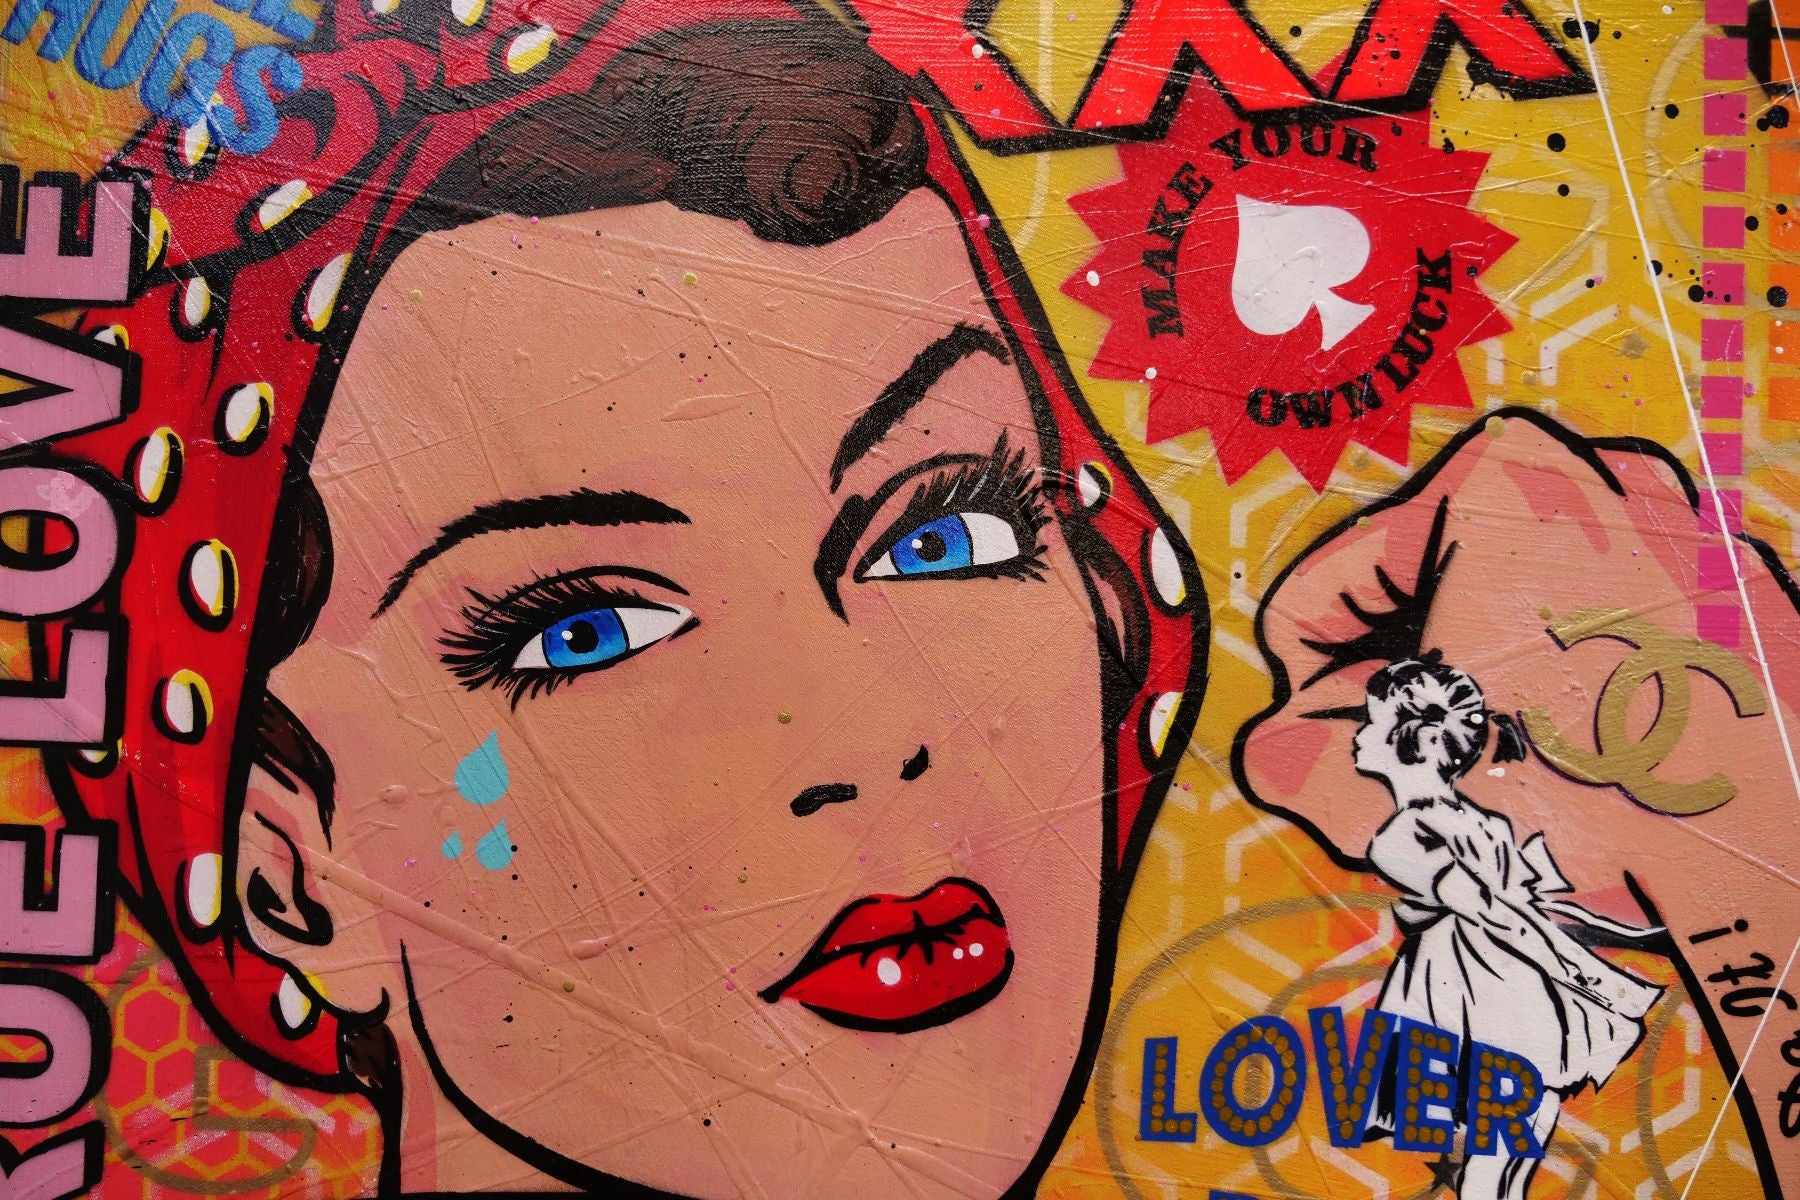 Diamond Rosie 160cm x 100cm Rosie The Riveter Textured Urban Pop Art Painting (SOLD)